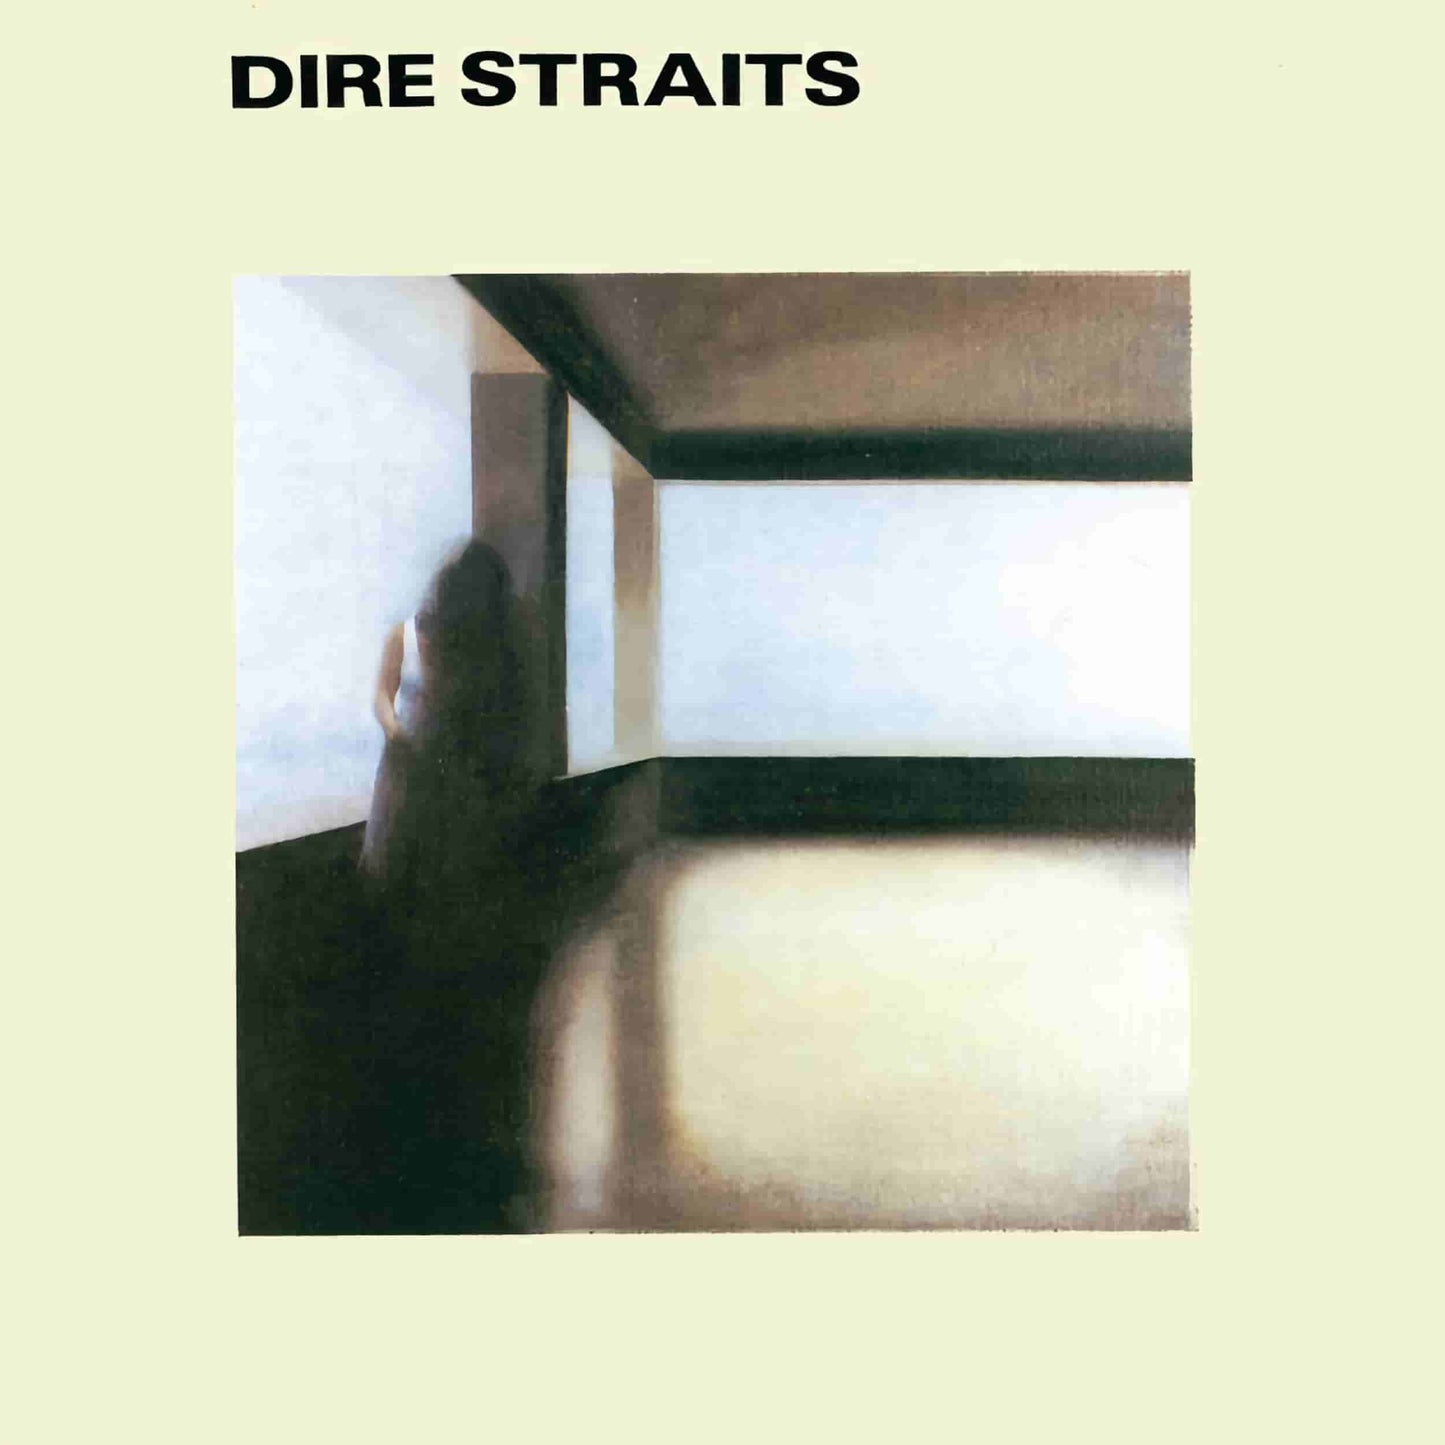 Dire Straits - Dire Straits - First LP